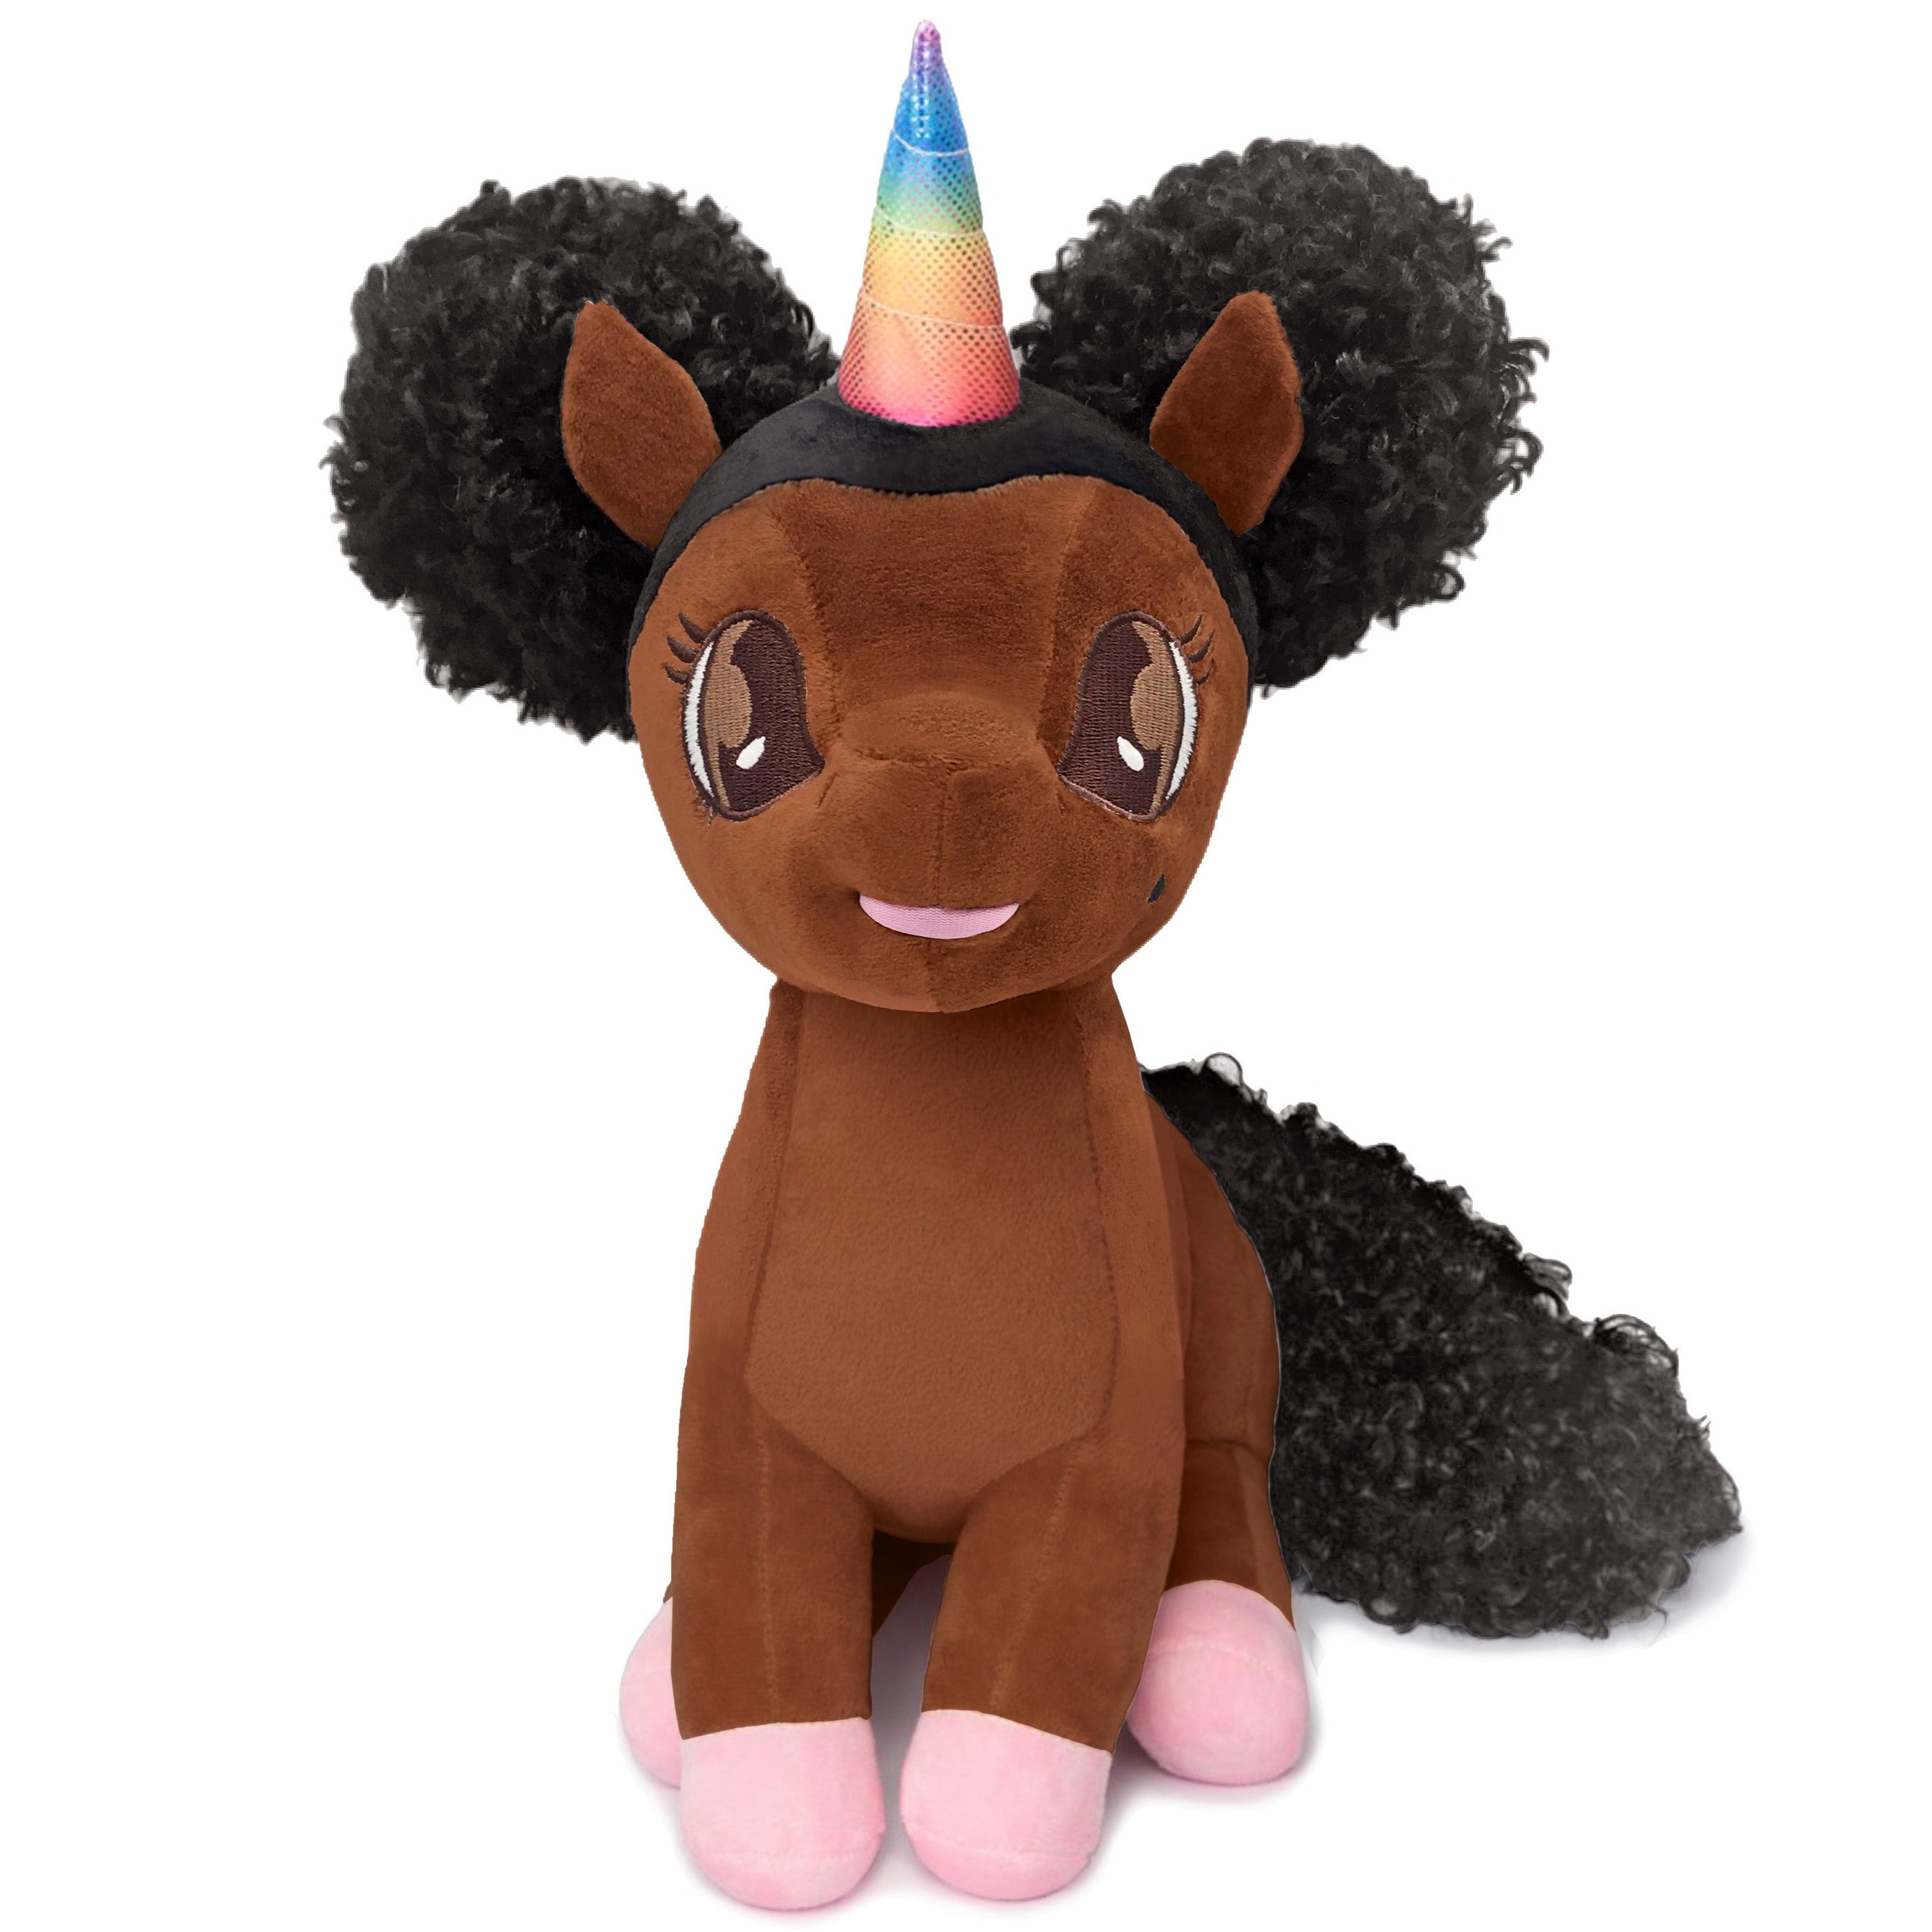 Chloe Black Unicorn Plush Toy with Brown Eyes - 15 inch